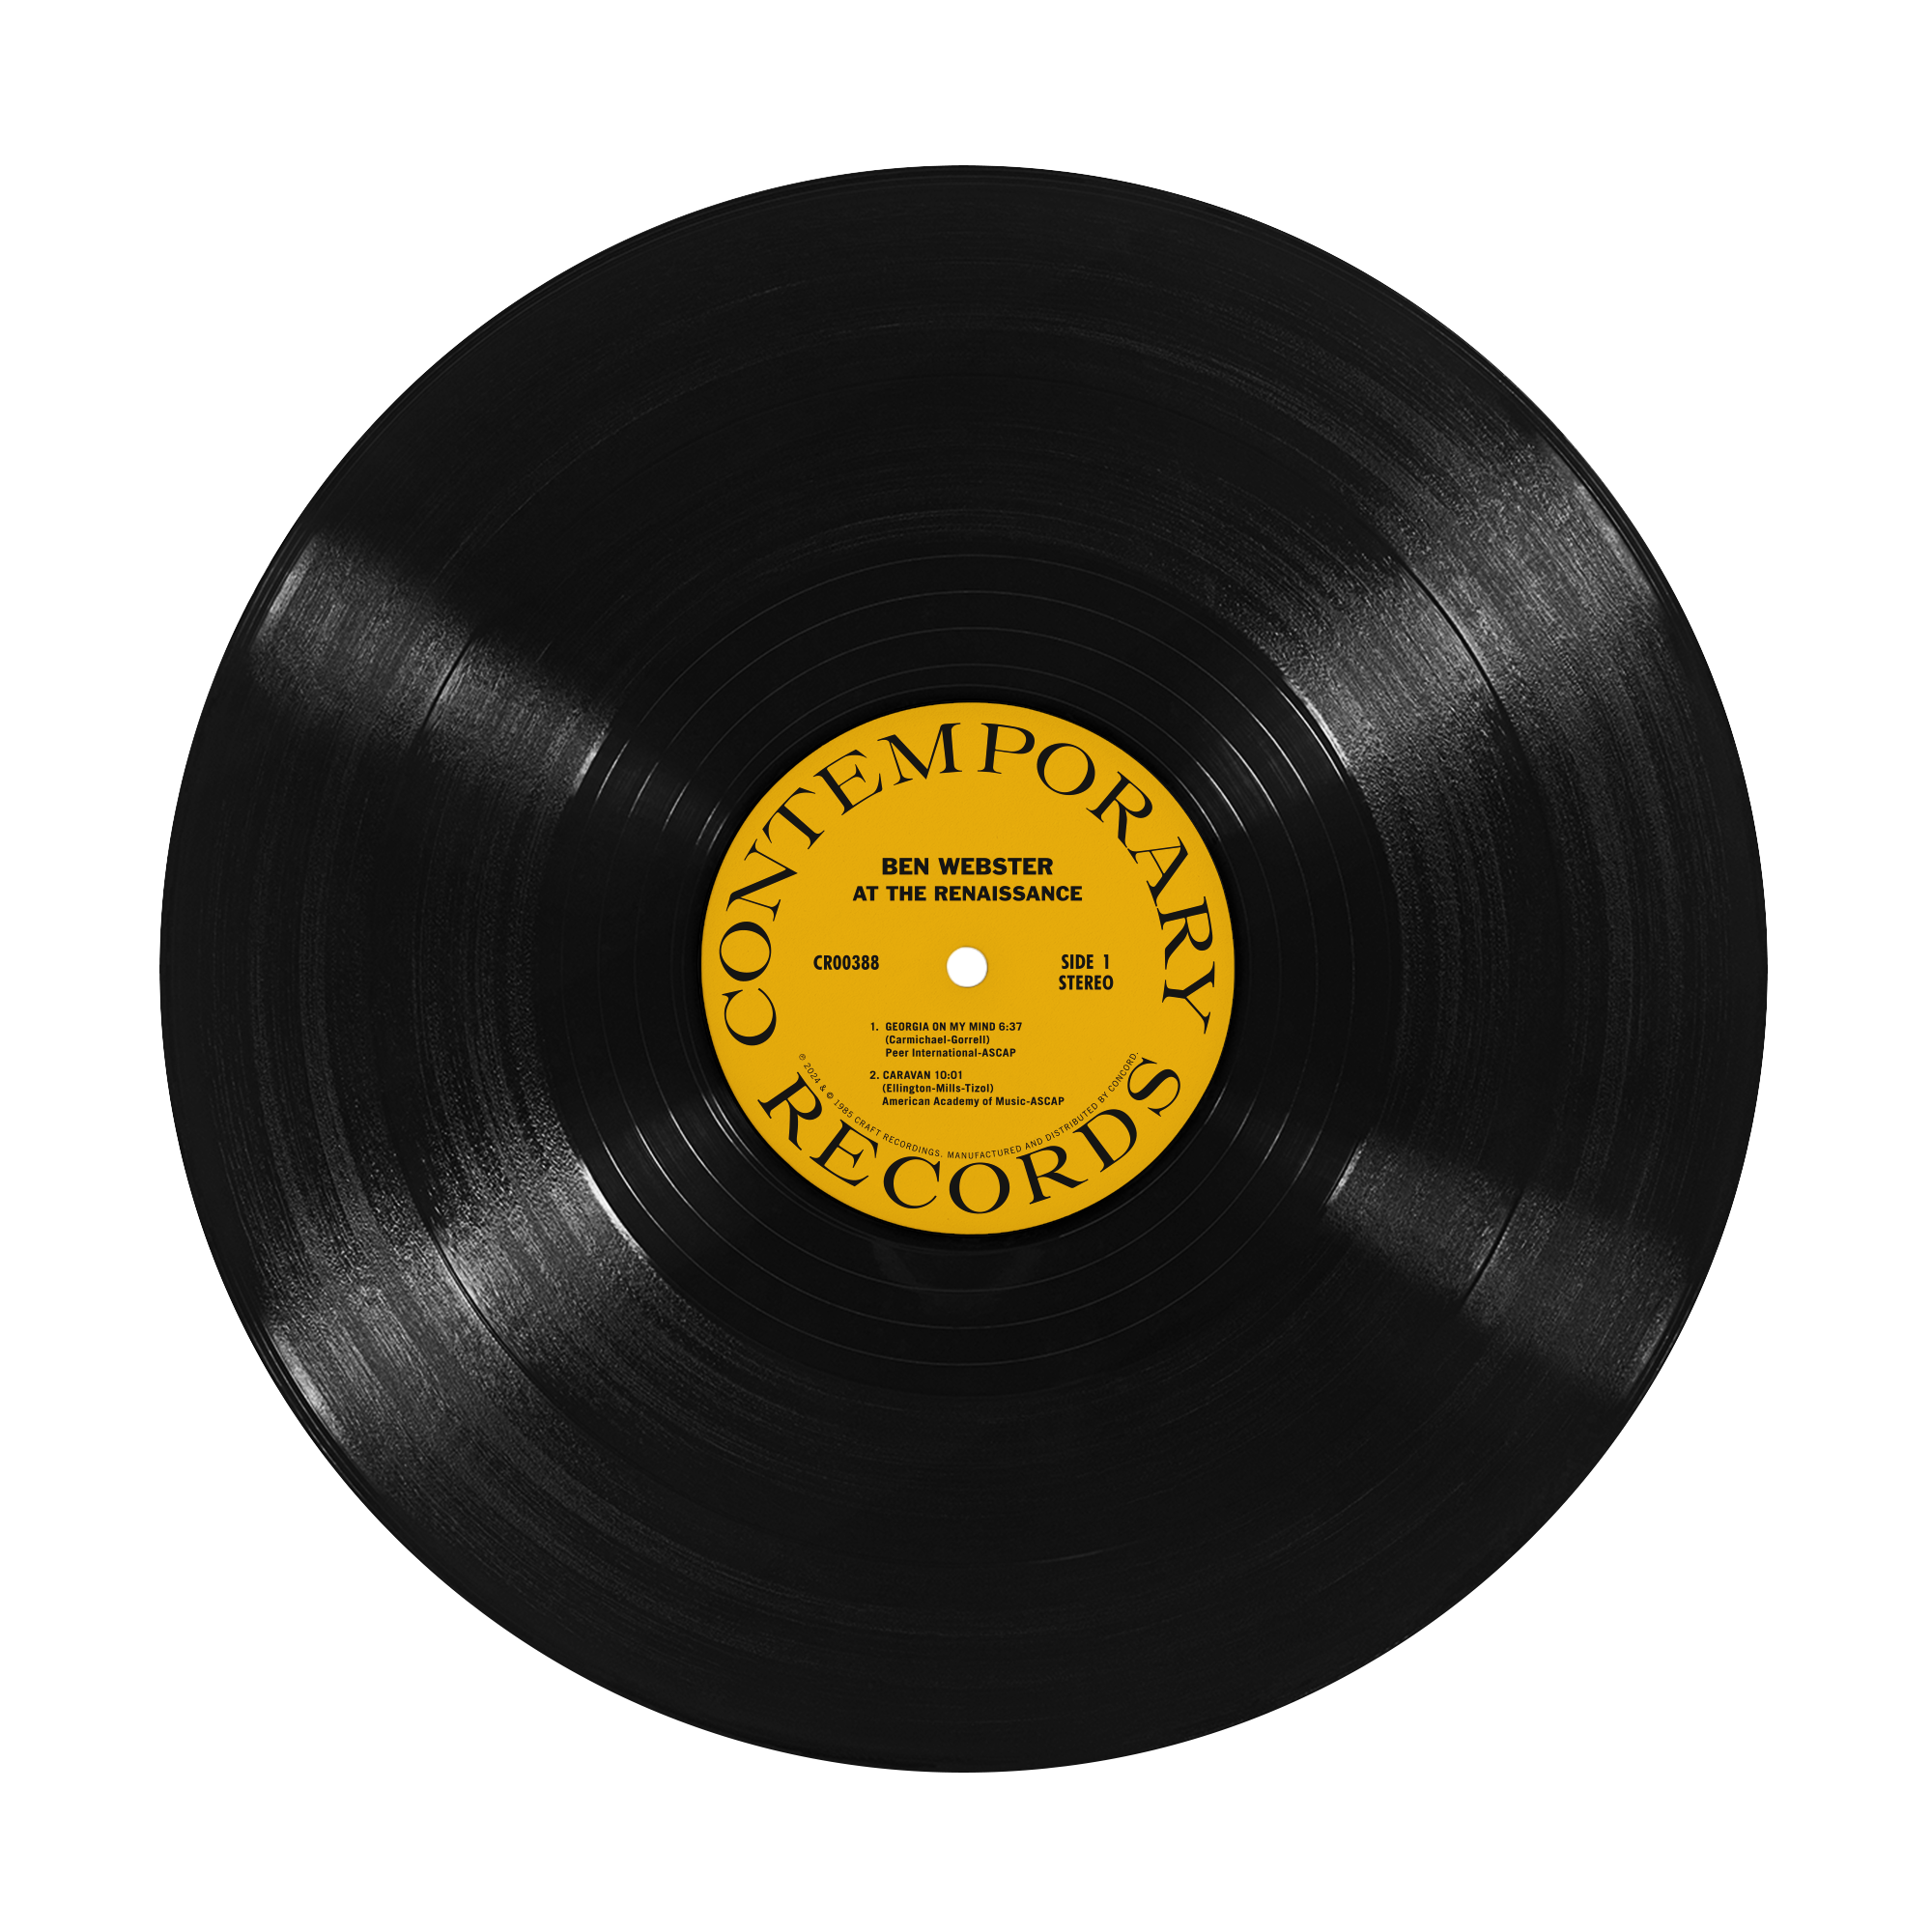 At The Renaissance - Contemporary Records Acoustic Sounds Series (180g LP)